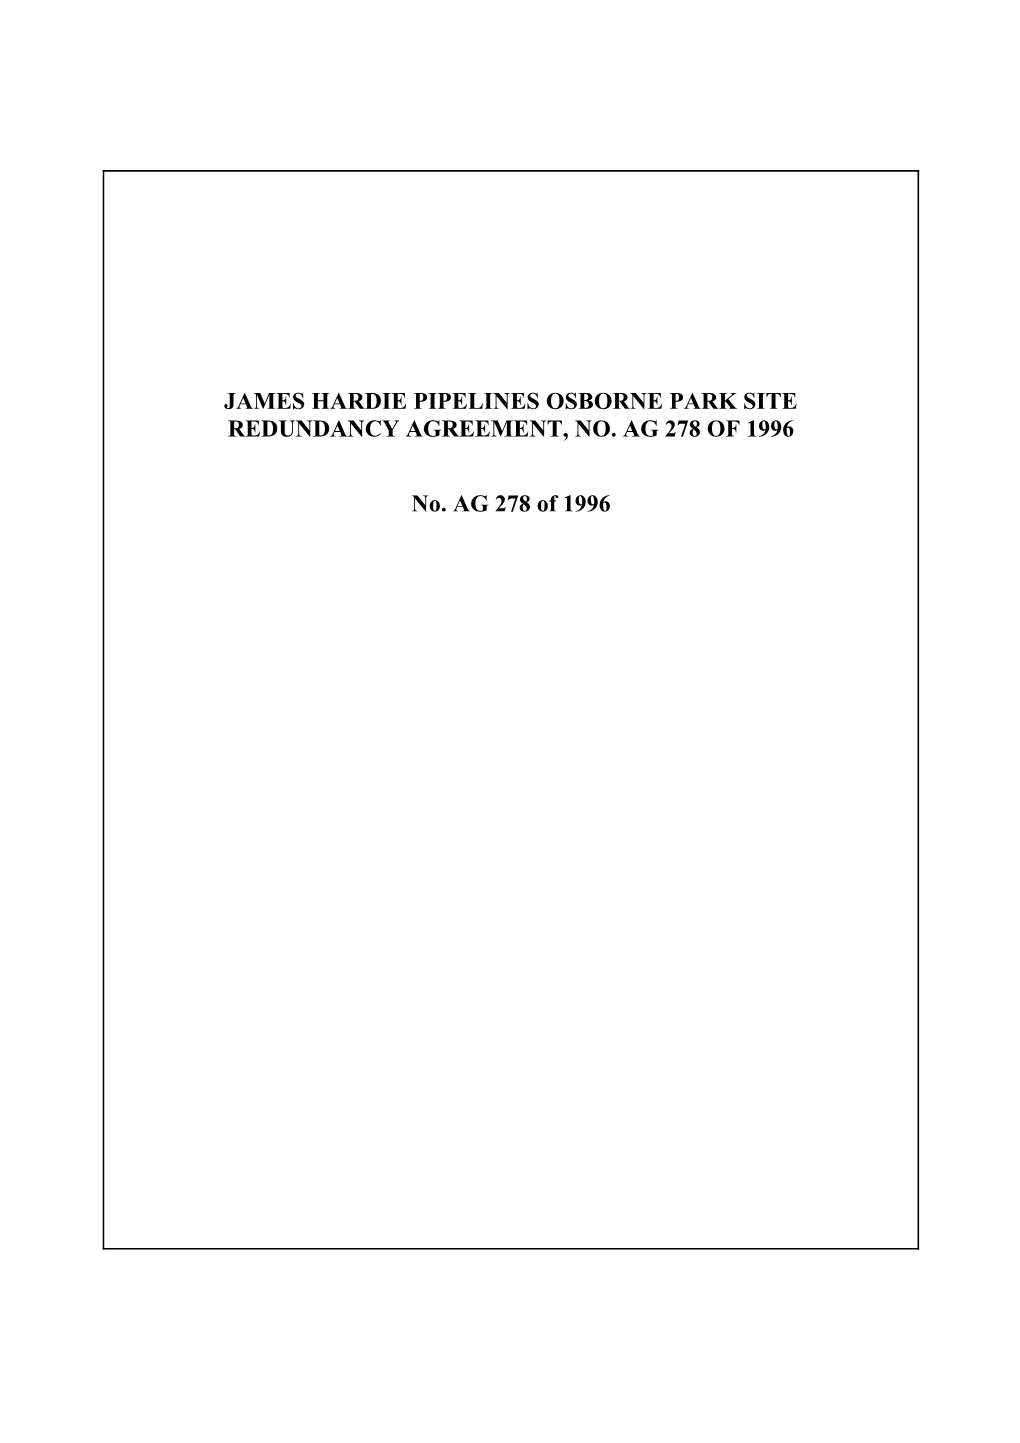 James Hardie Pipelines Osborne Park Site Redundancy Agreement, No. AG 278 of 1996